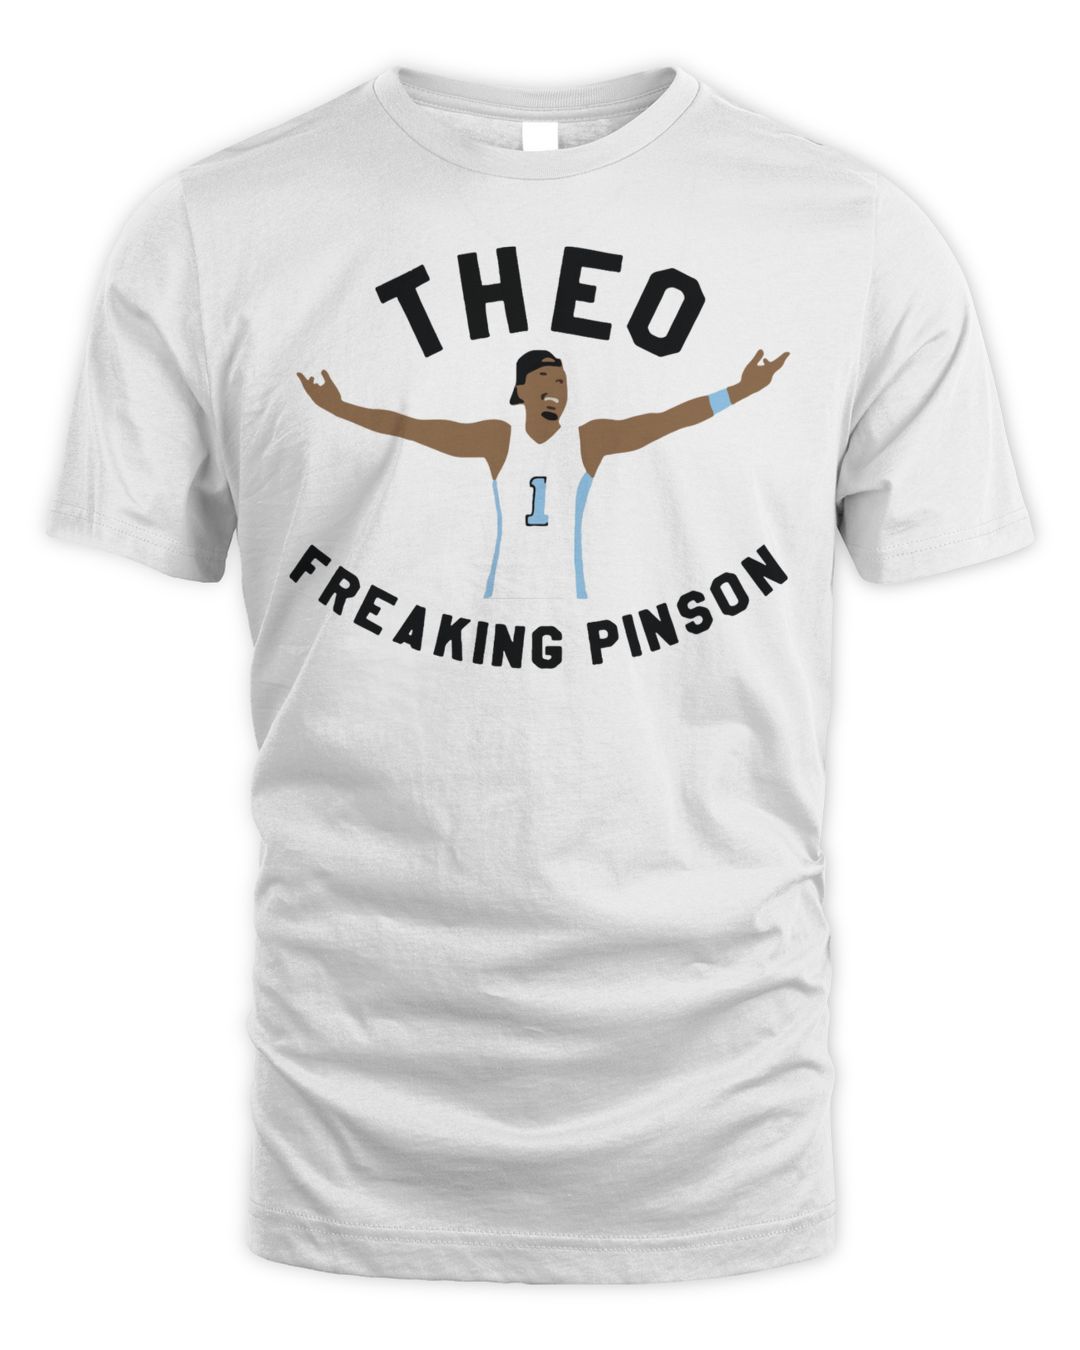 Theo Pinson Shirt